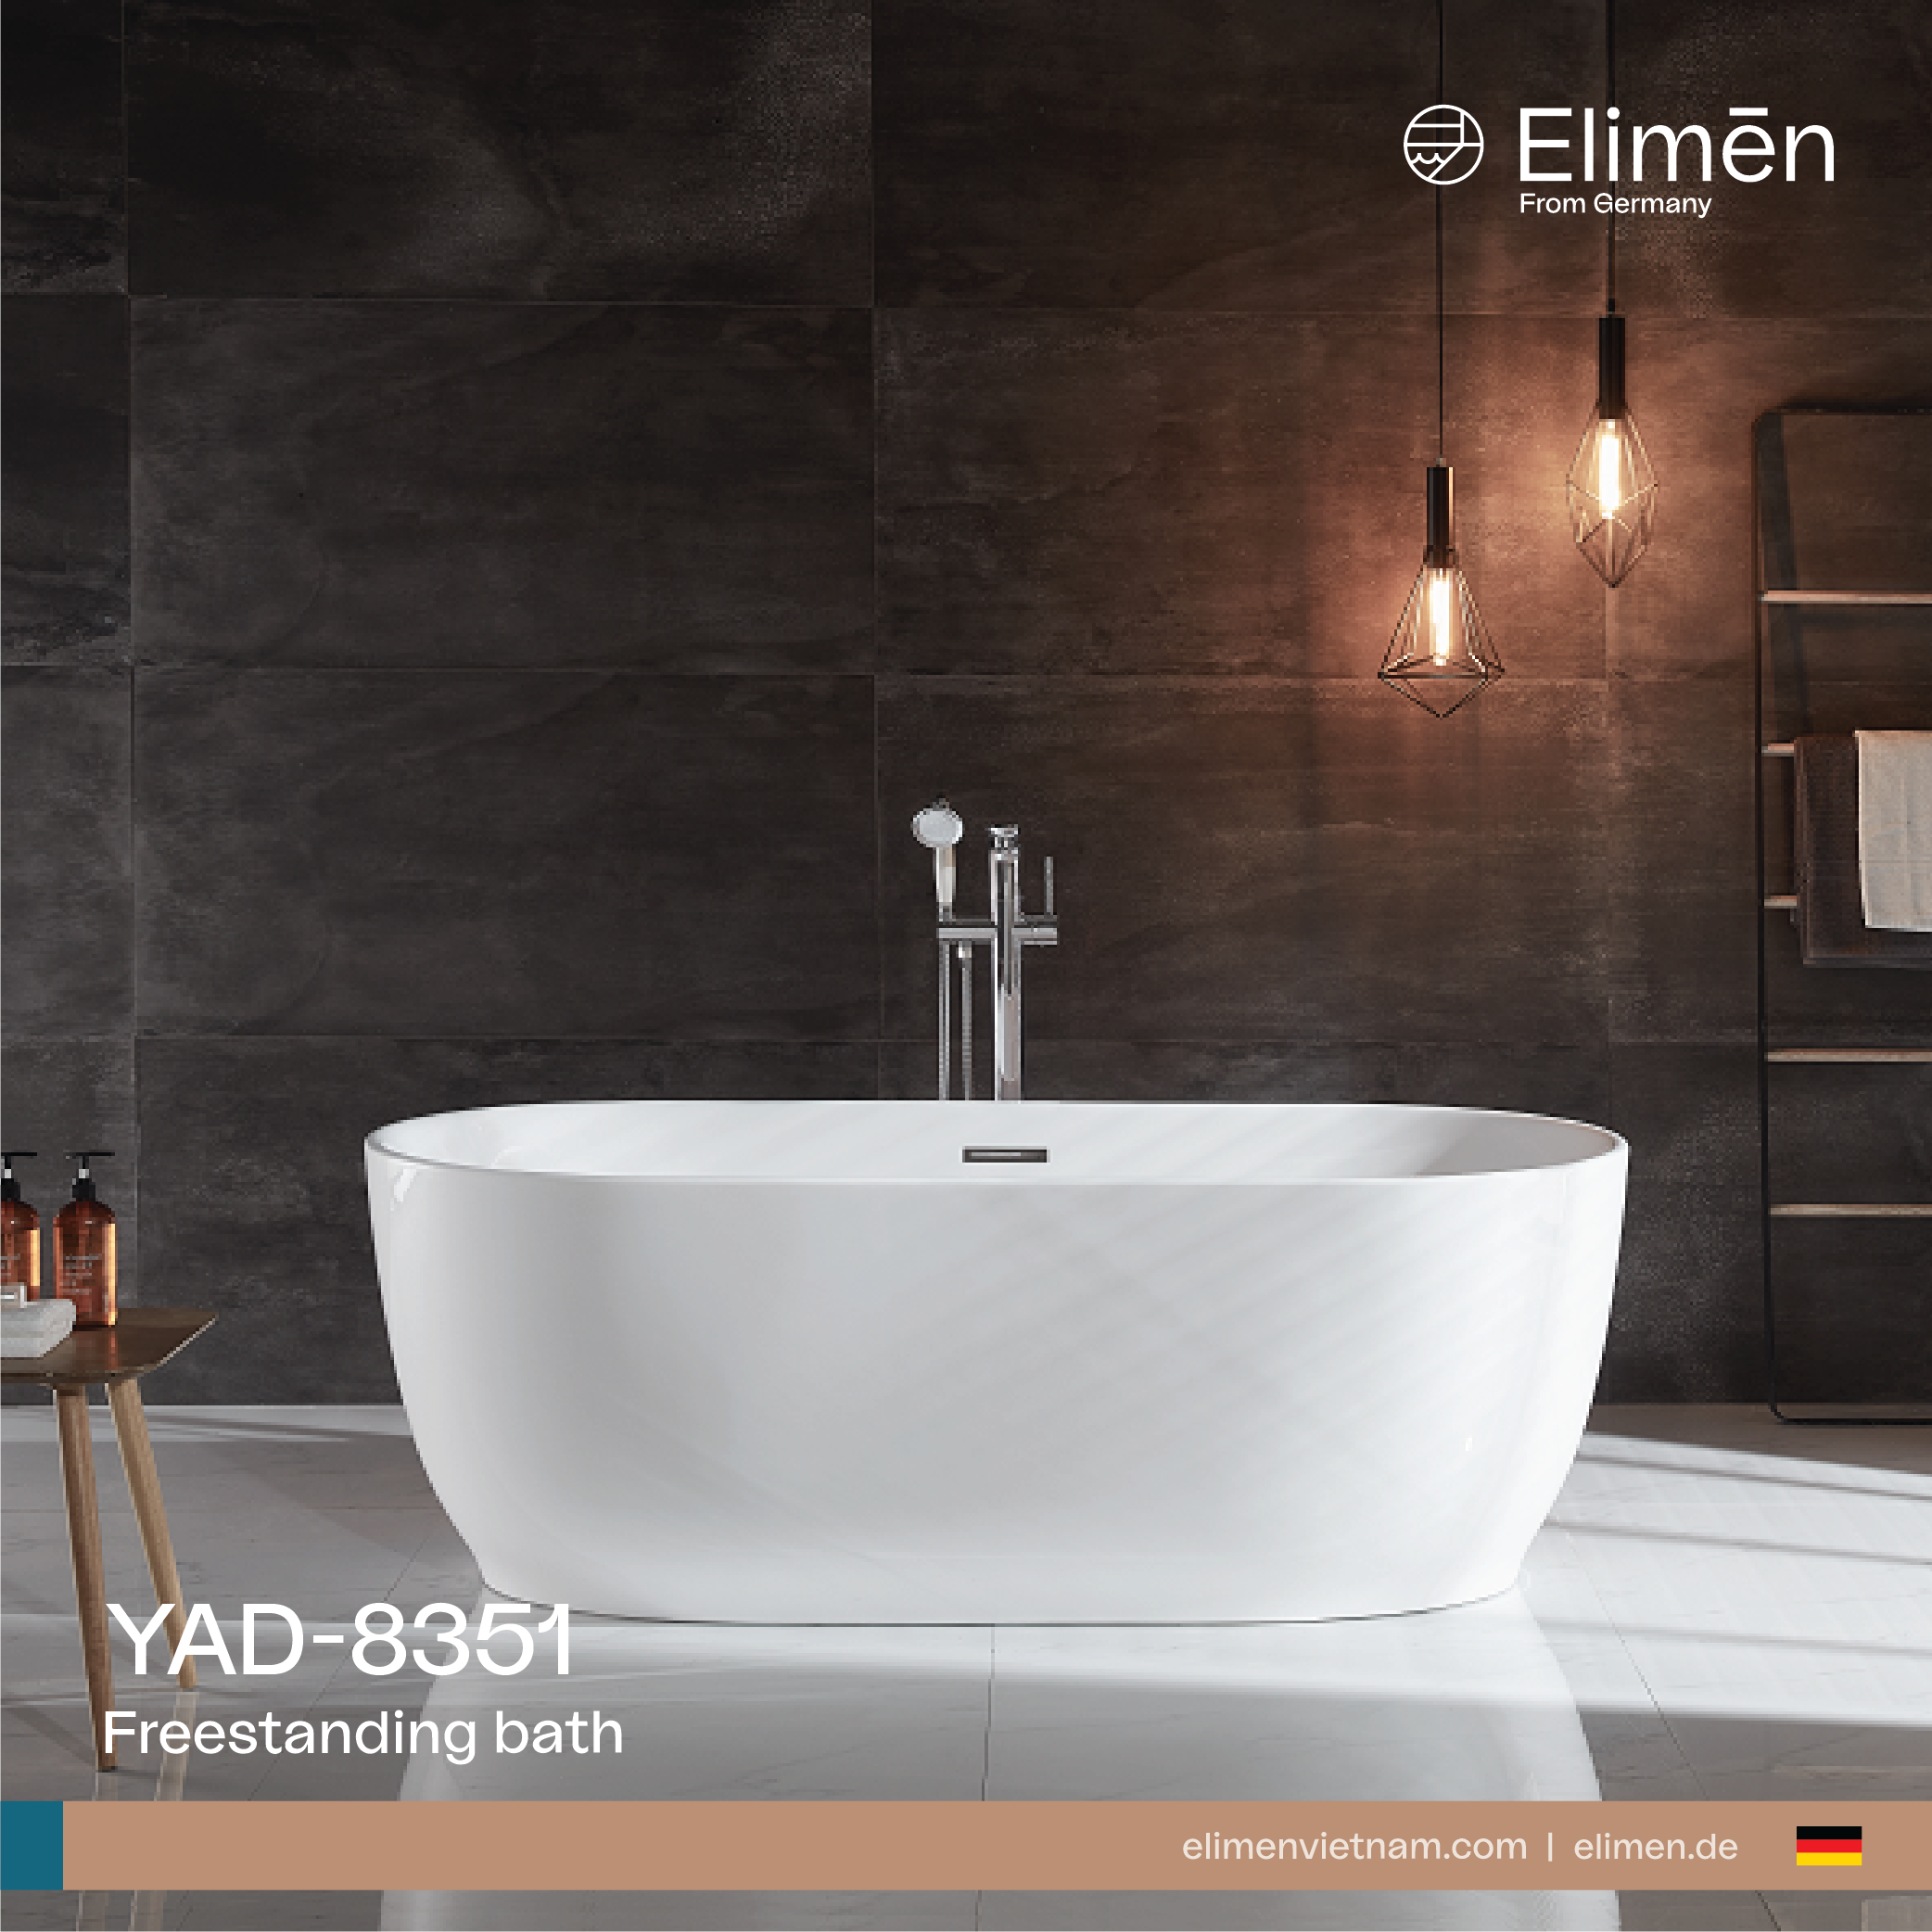 Elimen bathtub - Code YAD-8351-150